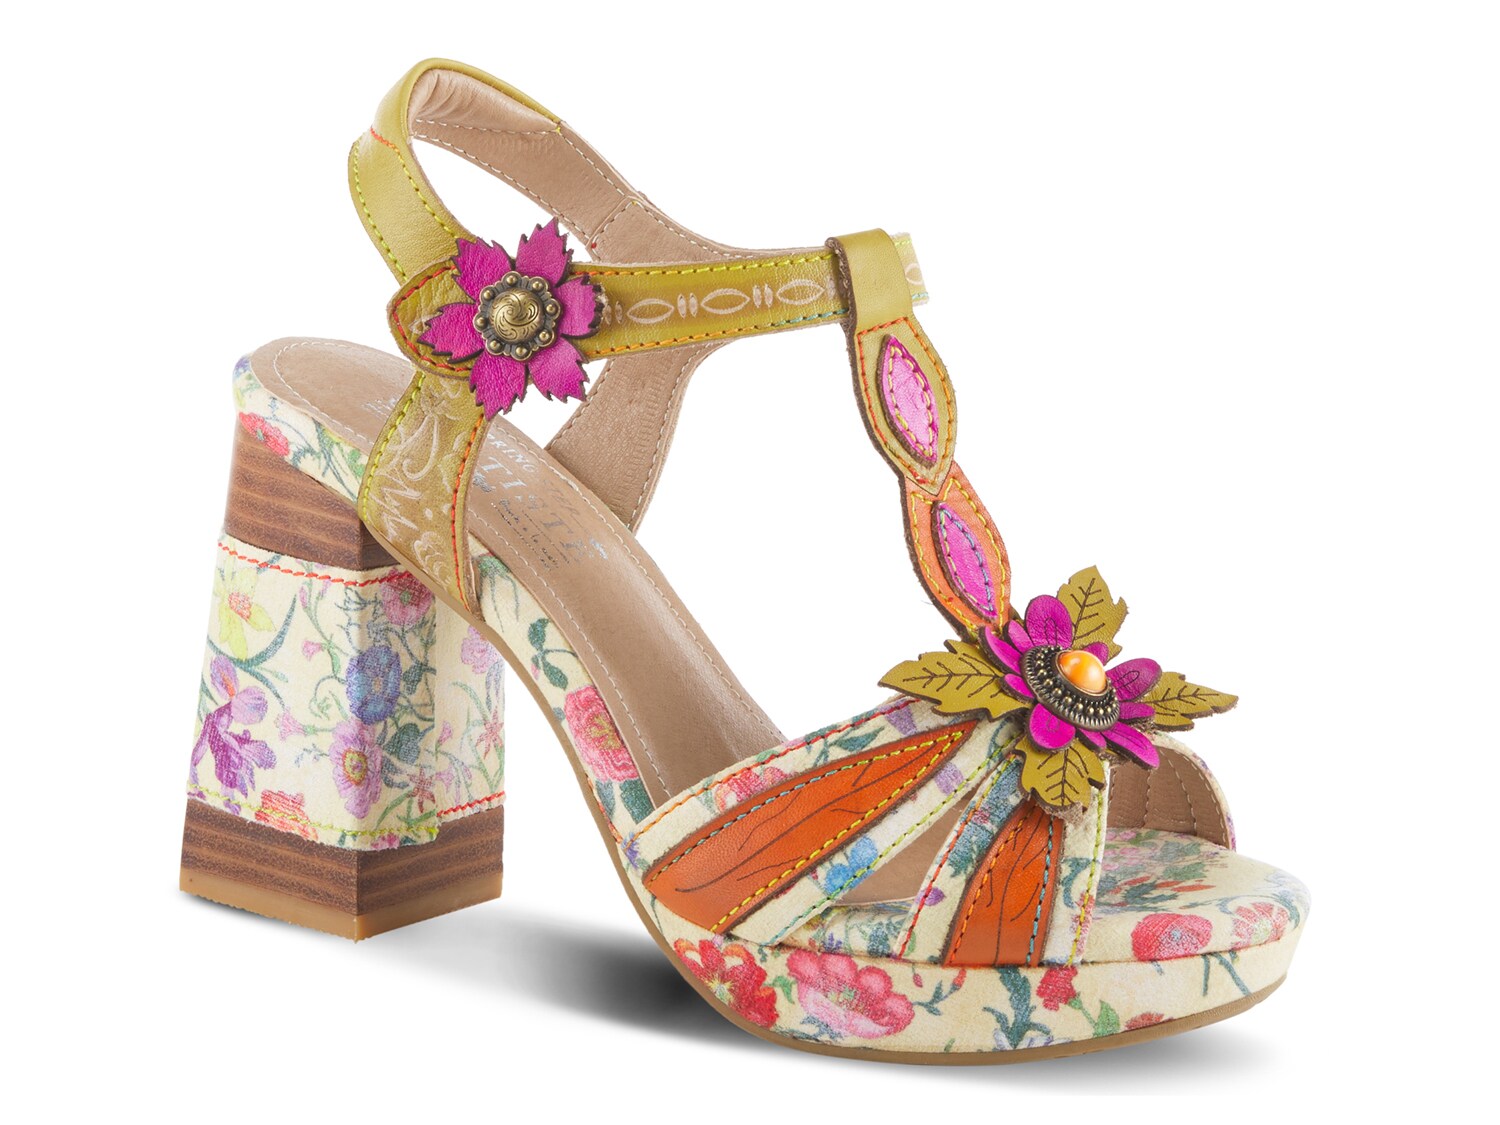 L'Artiste by Spring Step Fabuloso Platform Sandal - Free Shipping | DSW